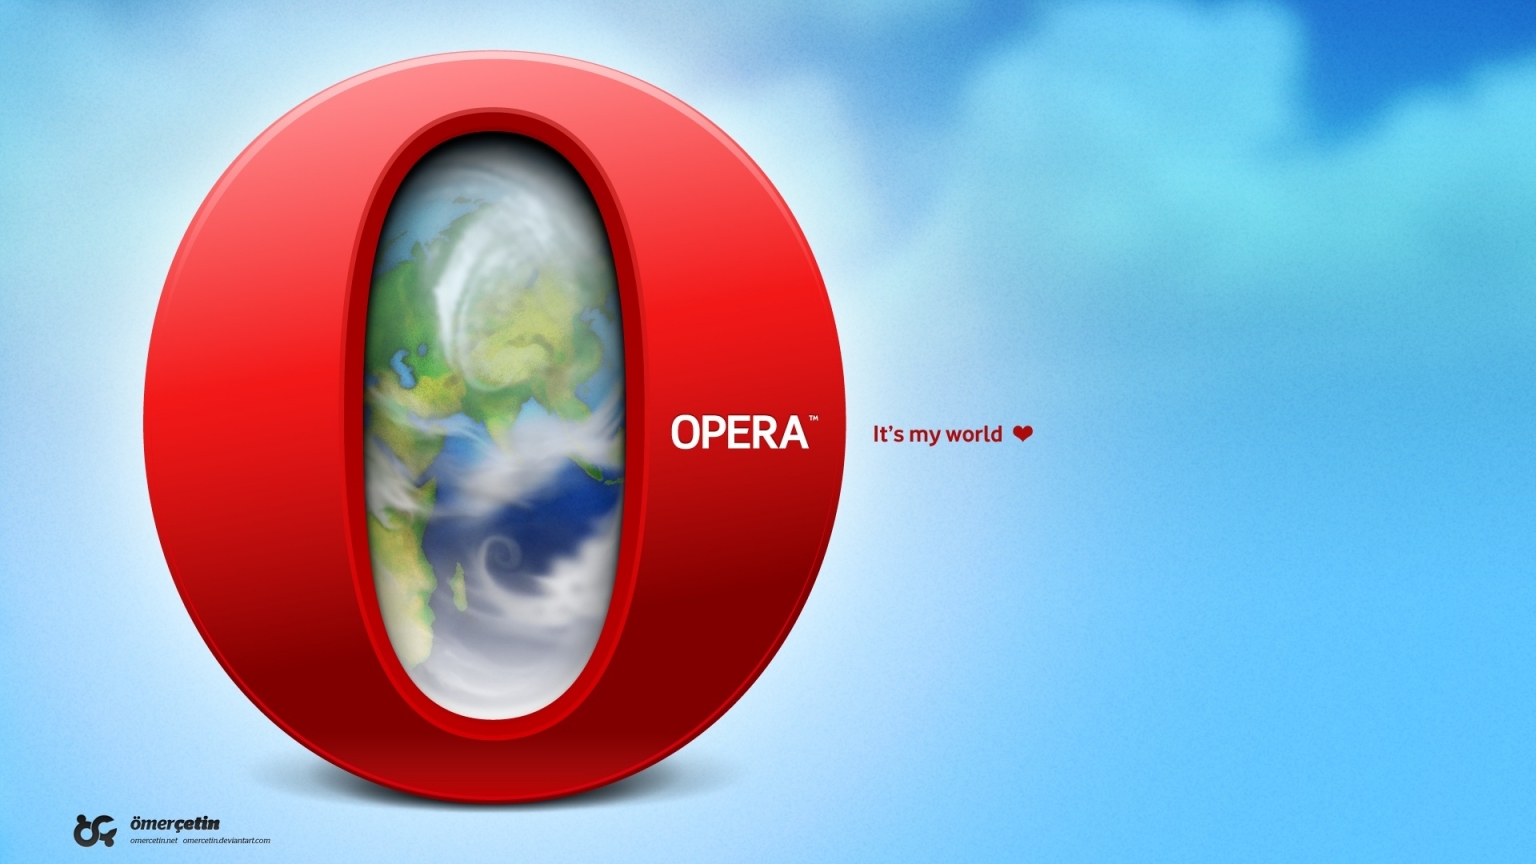 Opera My world for 1536 x 864 HDTV resolution